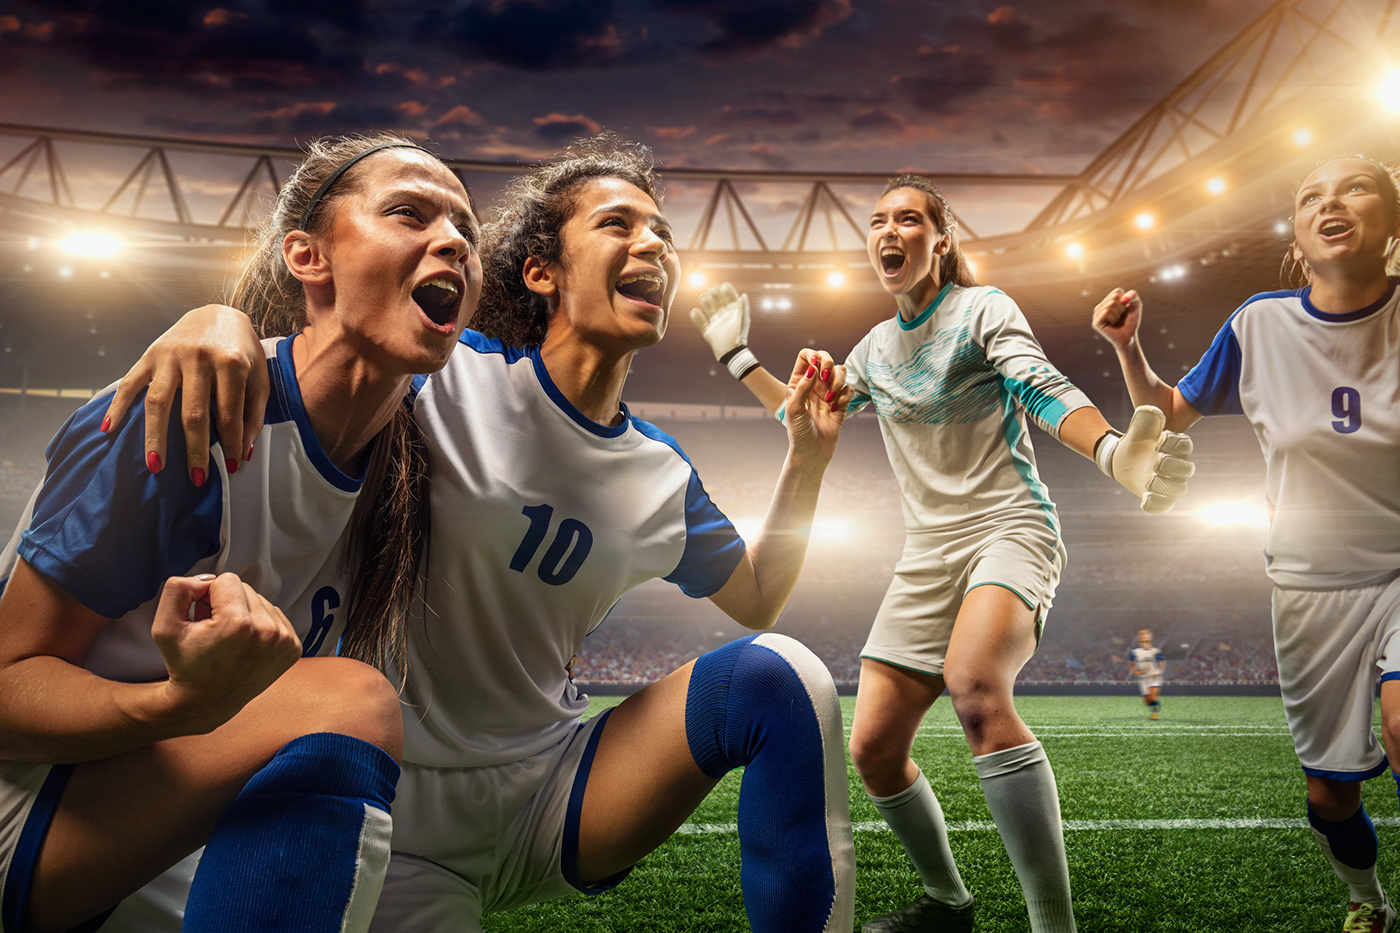 adidas emotion football Nike Play Football Play hard soccer sport sport photo